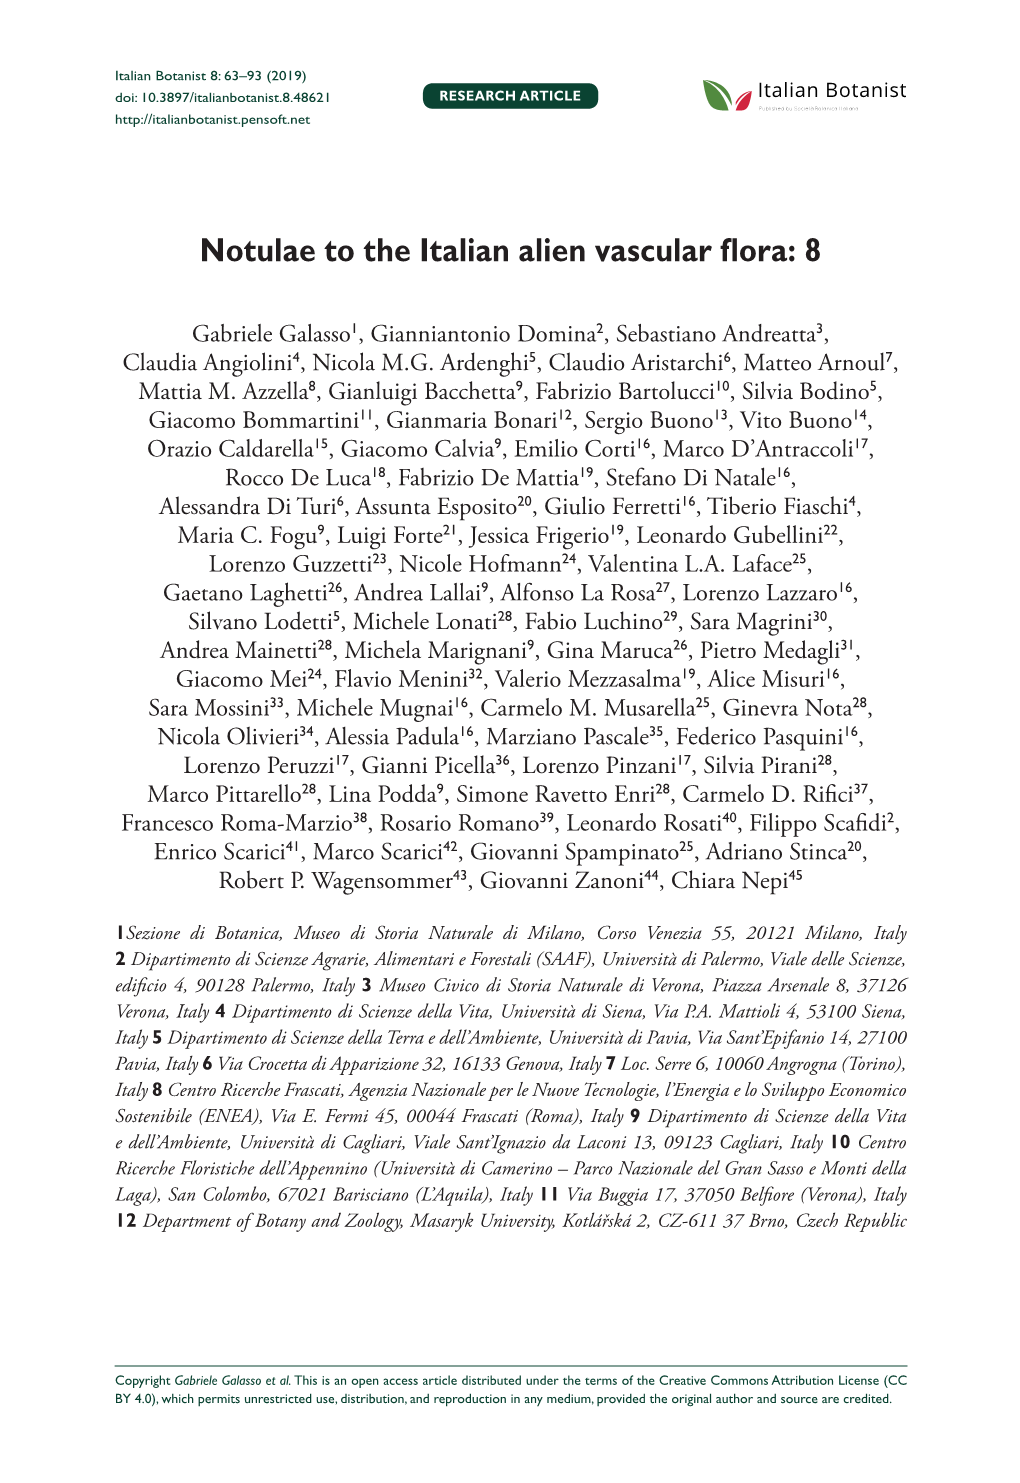 Notulae to the Italian Alien Vascular Flora: 8 63 Doi: 10.3897/Italianbotanist.8.48621 RESEARCH ARTICLE